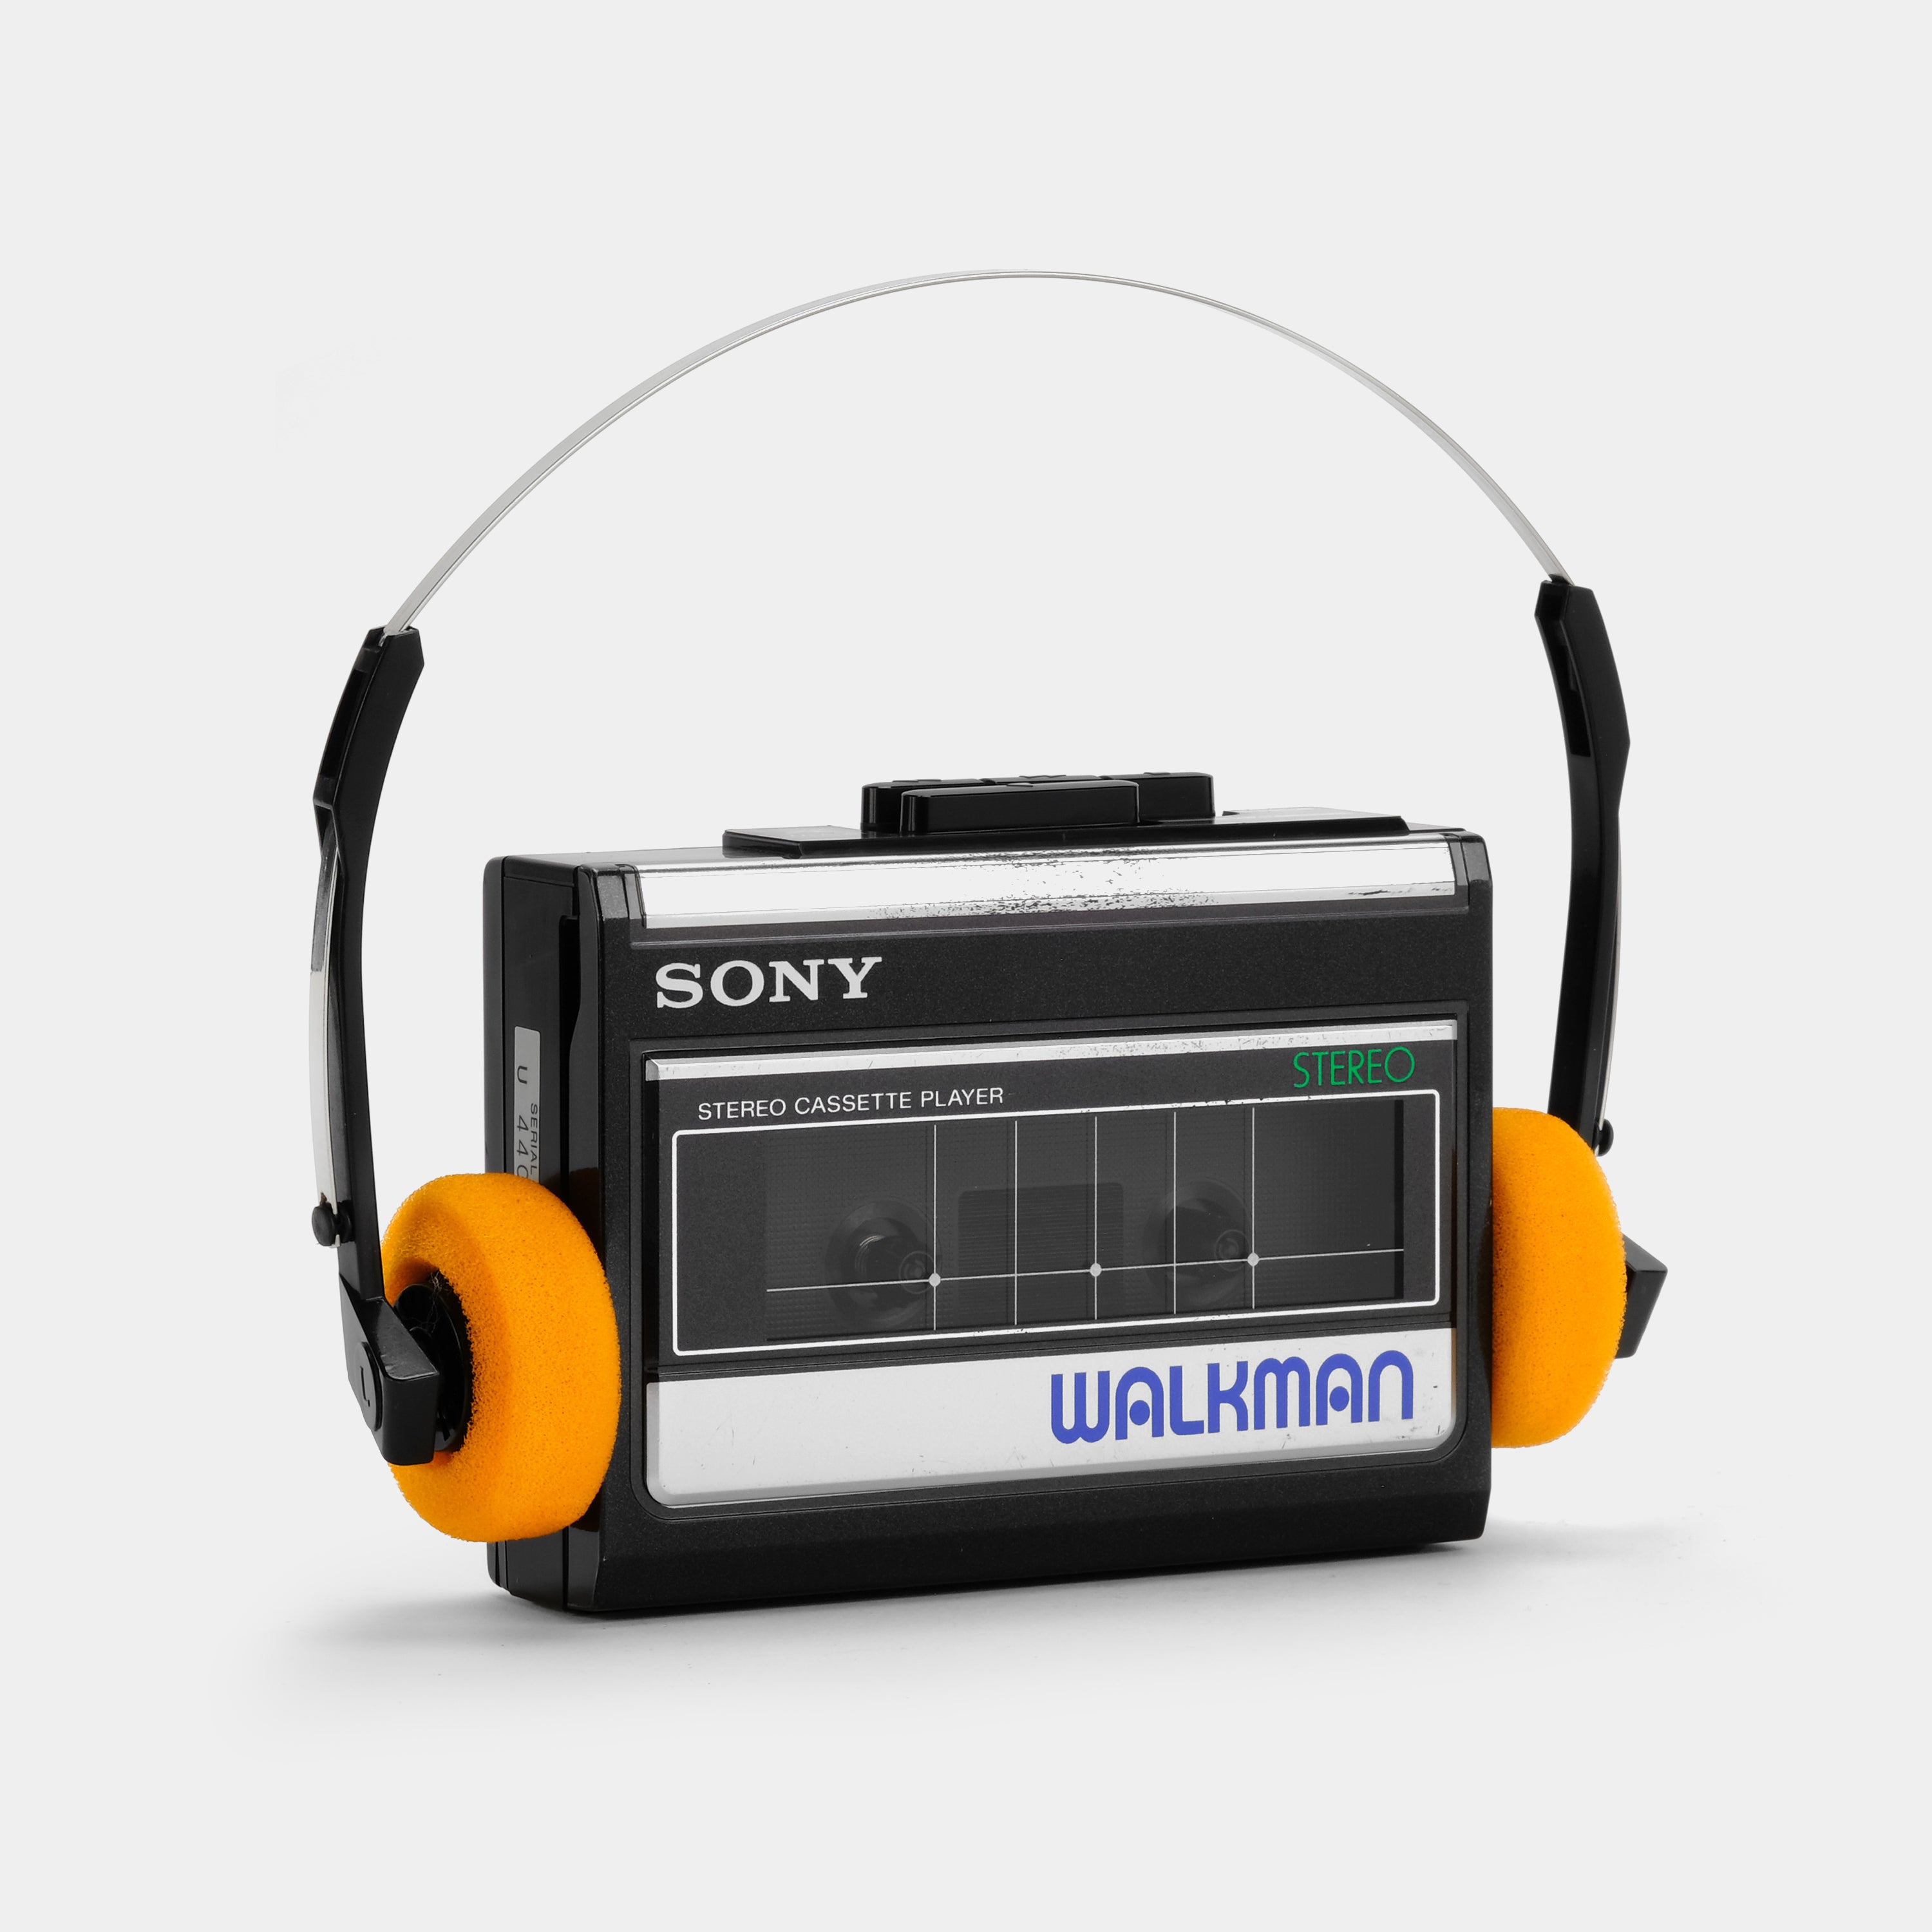 Sony Walkman WM-41 Portable Cassette Player